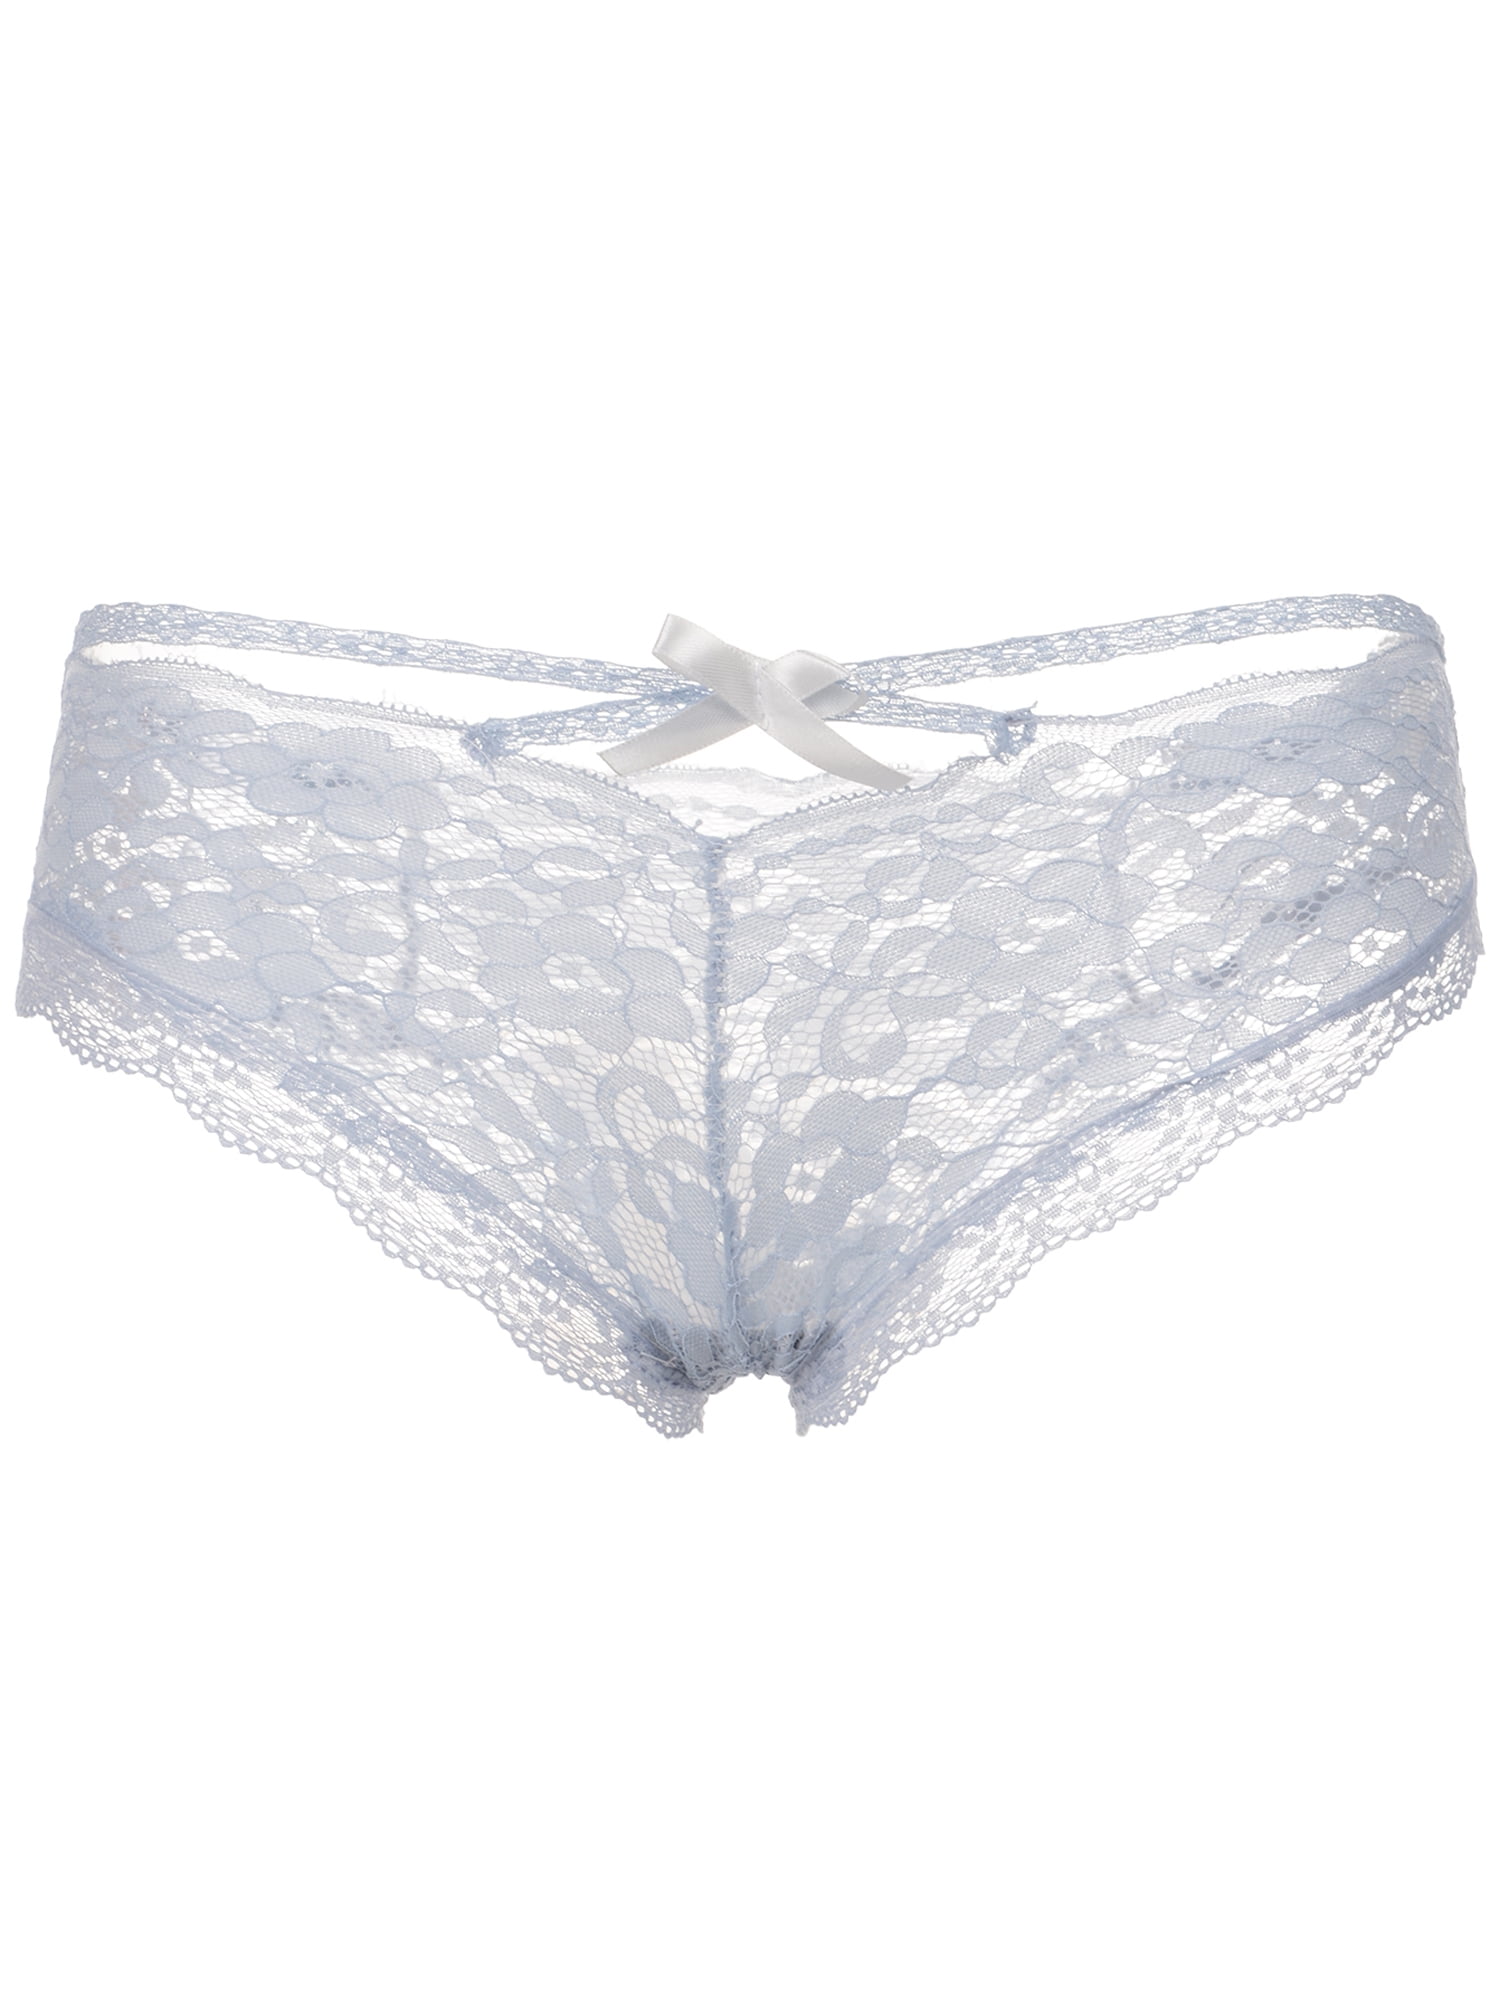 LisenraIn Women Lace Panties See Through Light Breathable Briefs